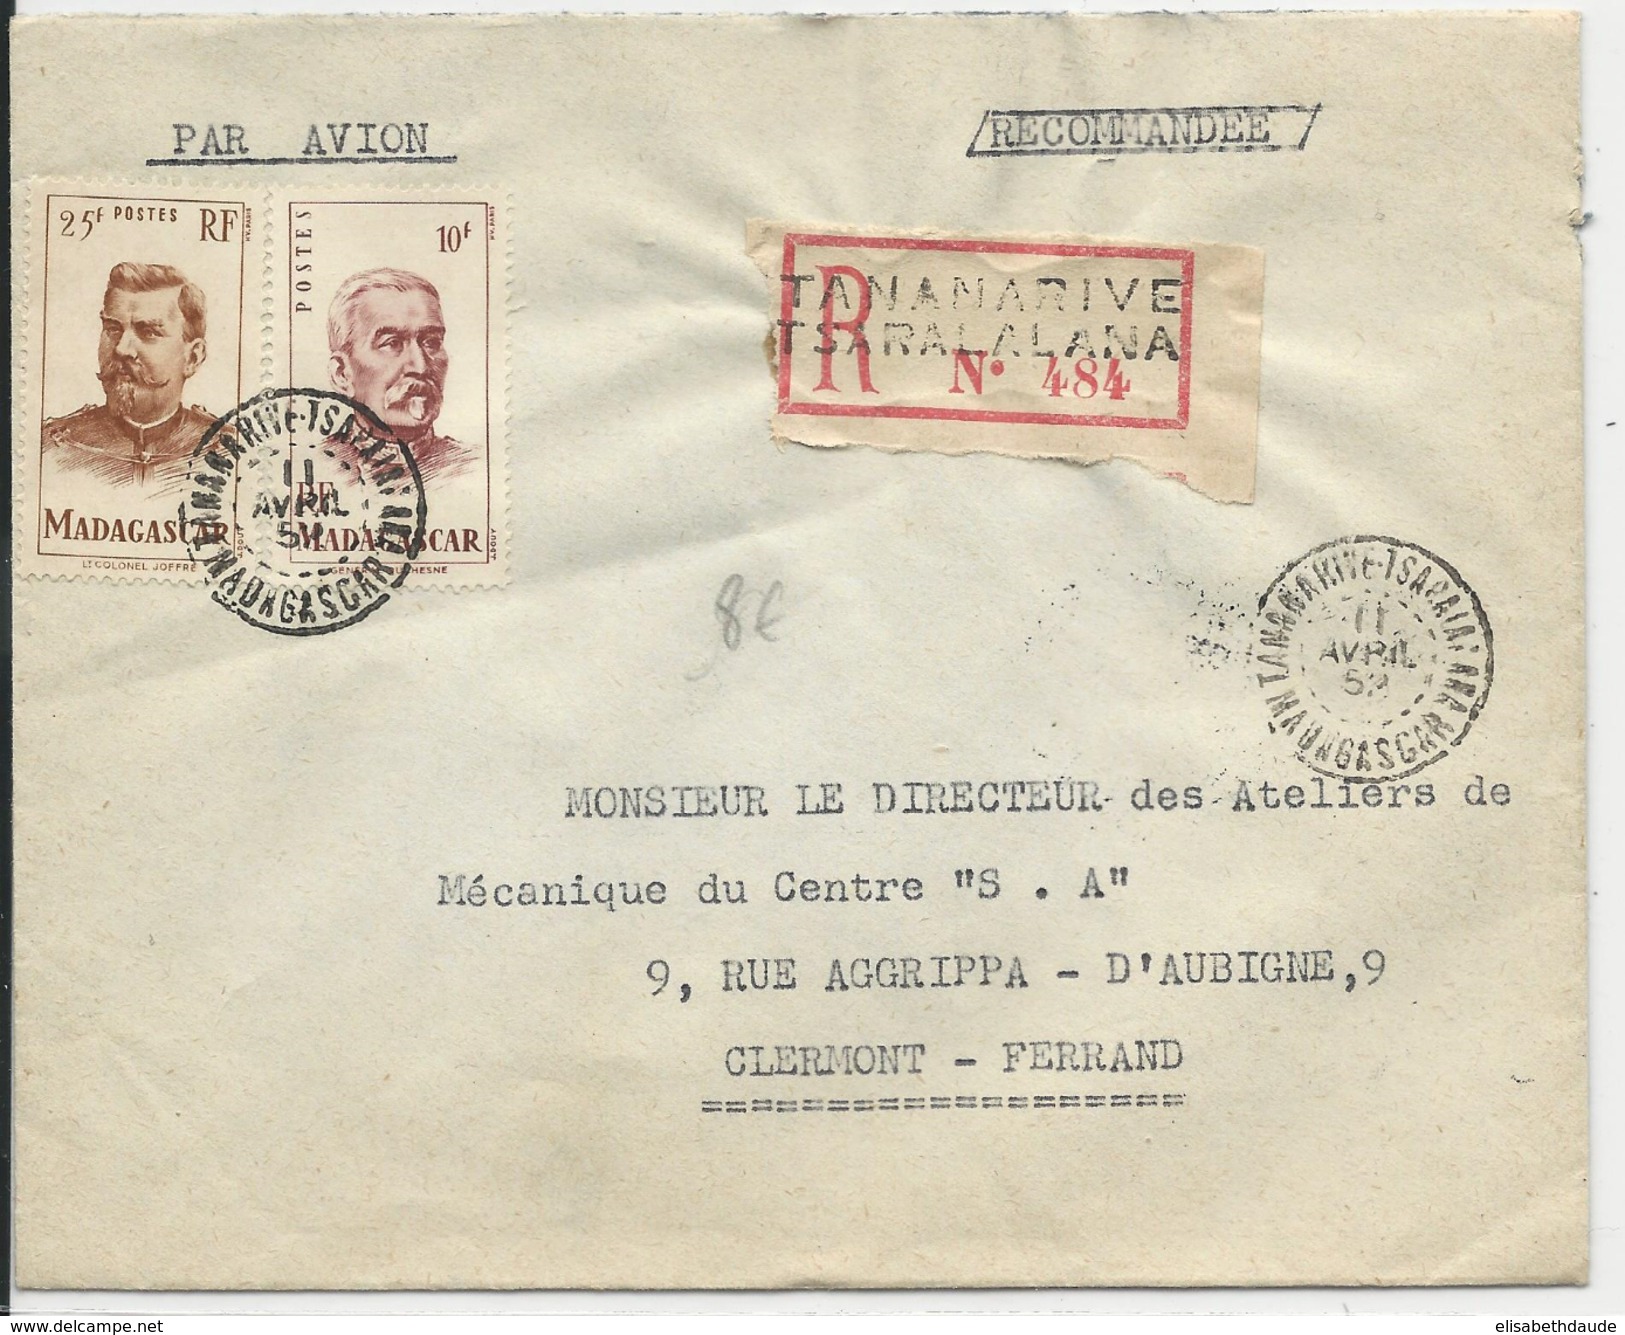 MADAGASCAR - 1952 - ENVELOPPE Par AVION RECOMMANDEE  De TANANARIVE TSARALALANA Pour CLERMONT - Covers & Documents